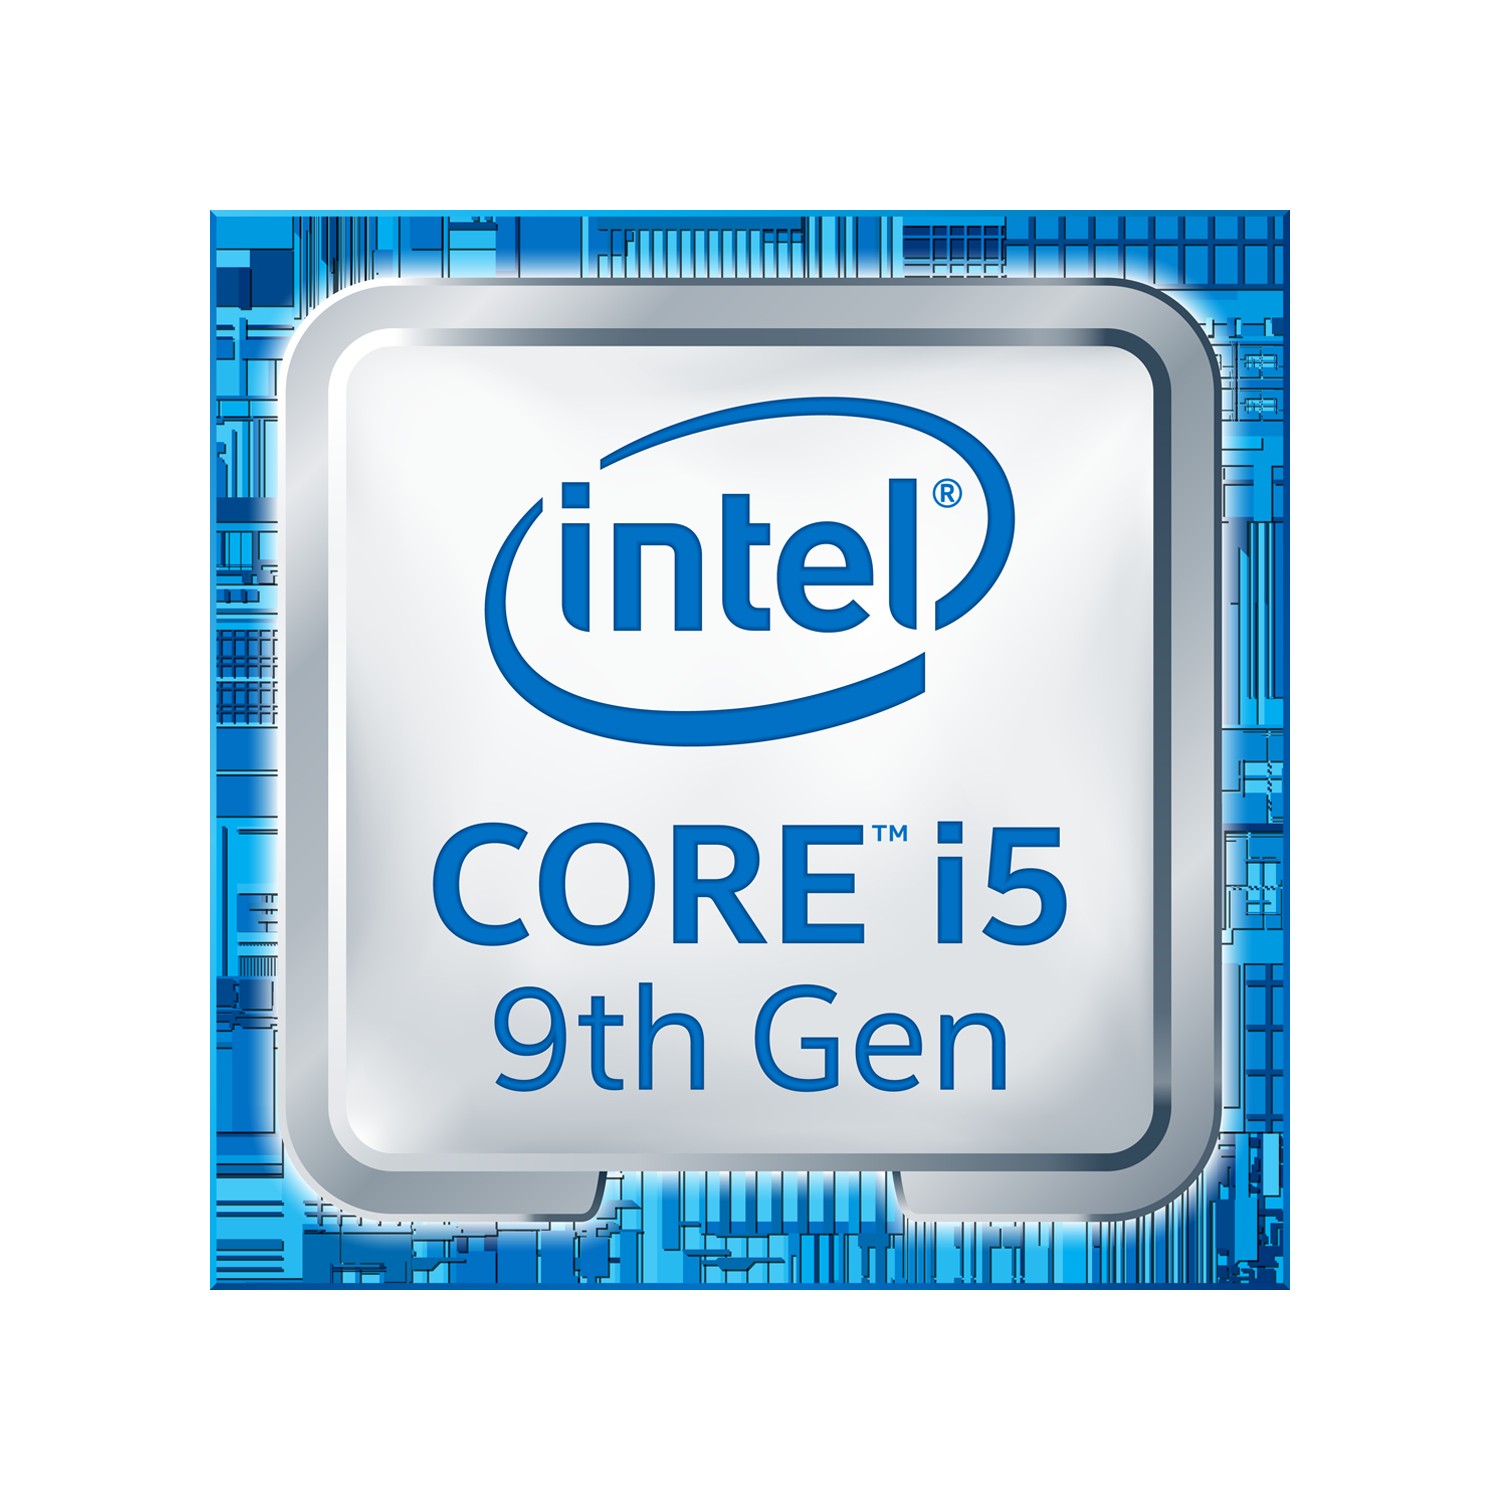 intel core i5 2400 vs i5 3470 vs i7 860